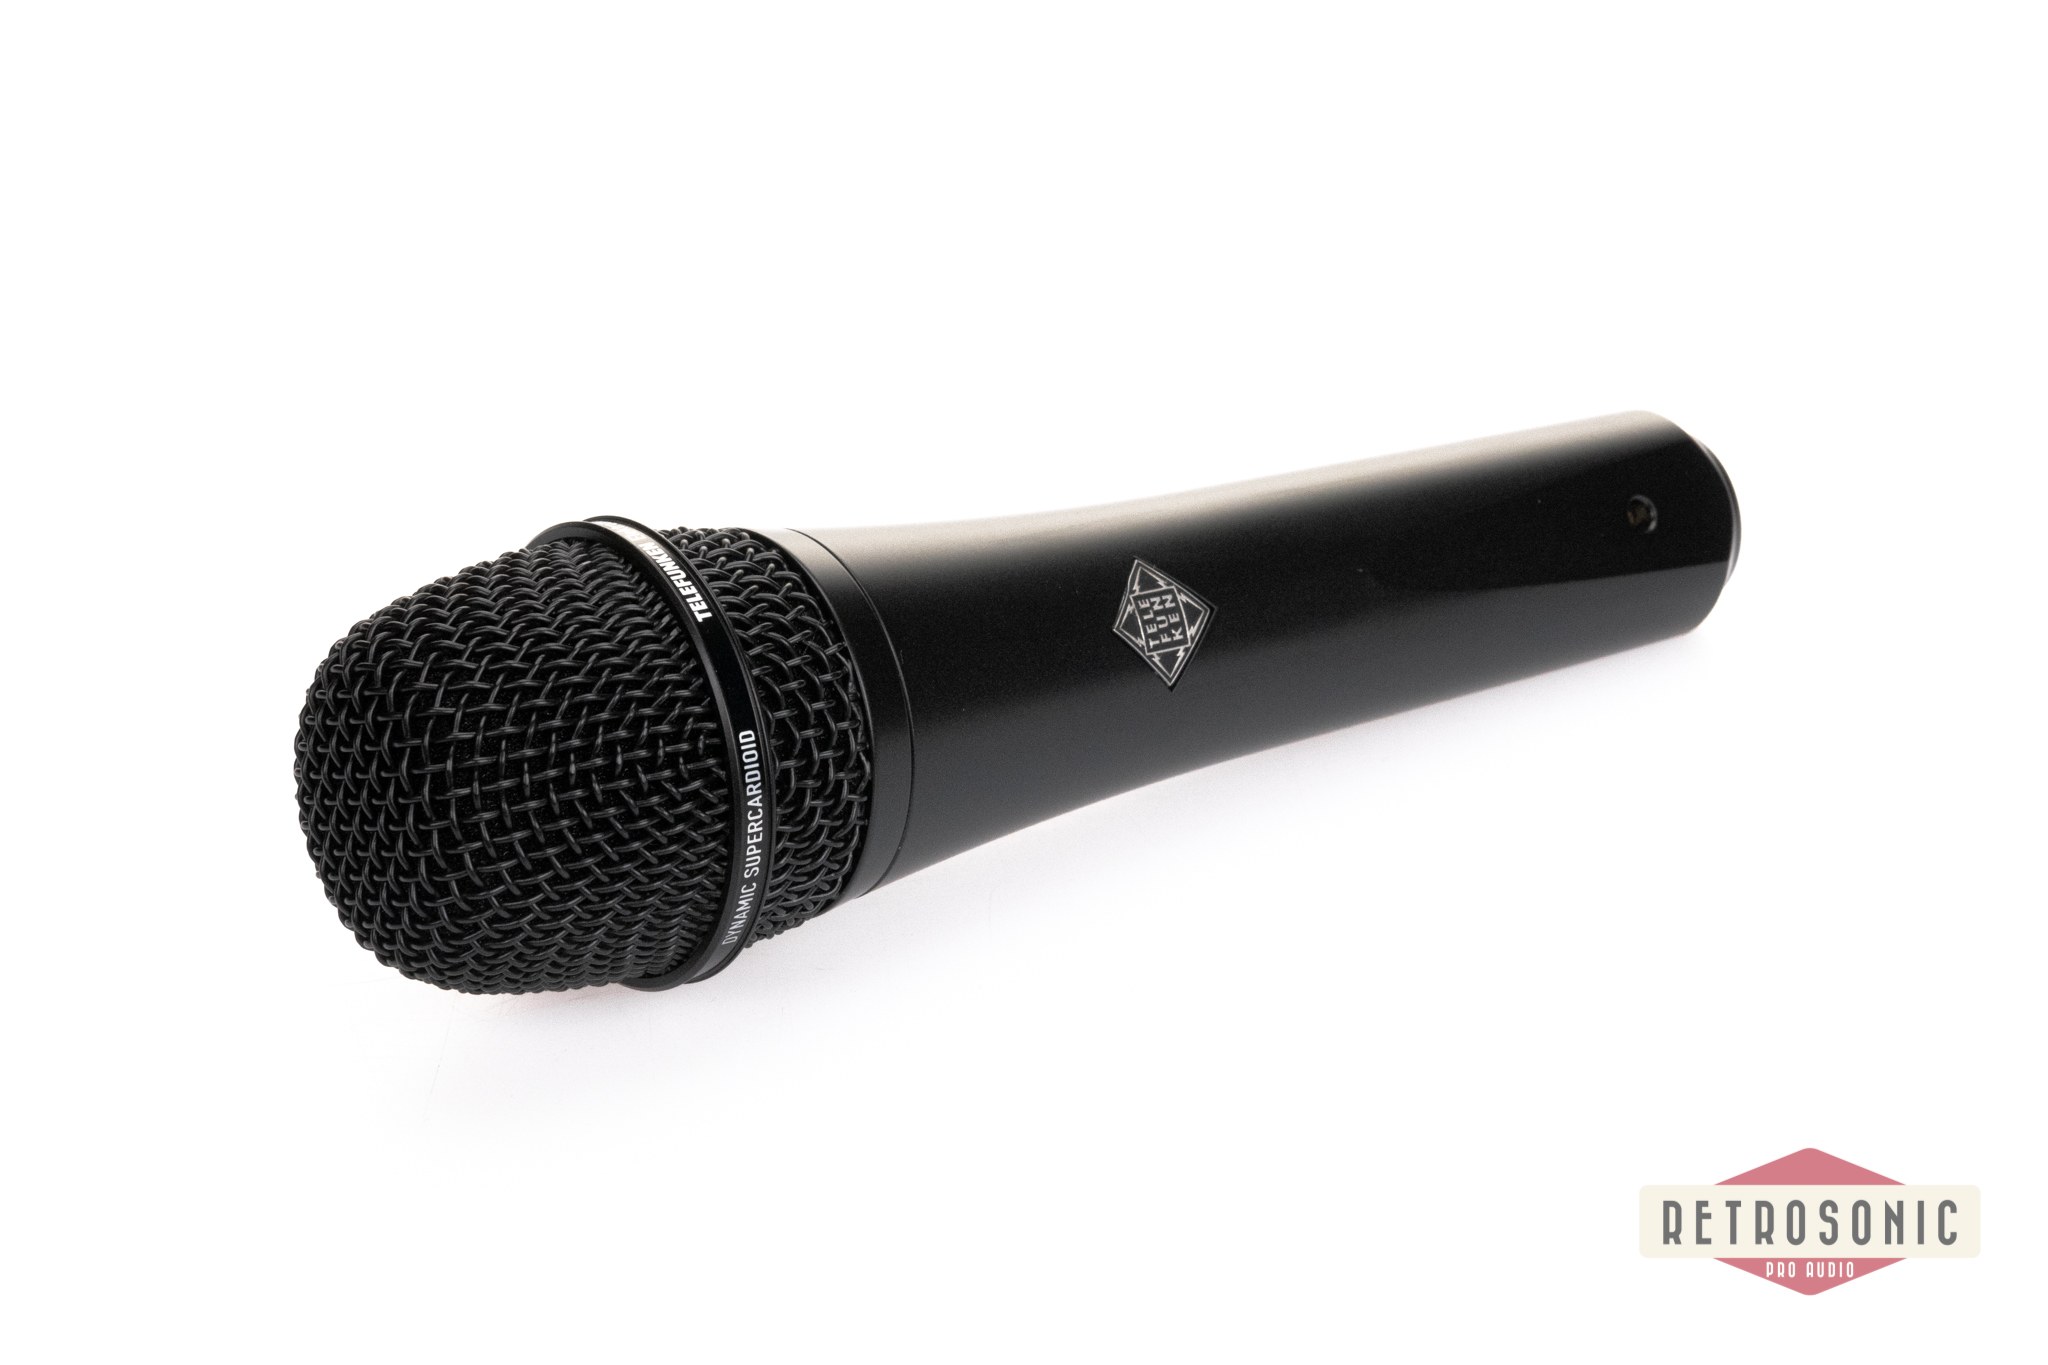 Telefunken M80 Dynamic Microphone Black/Black grille